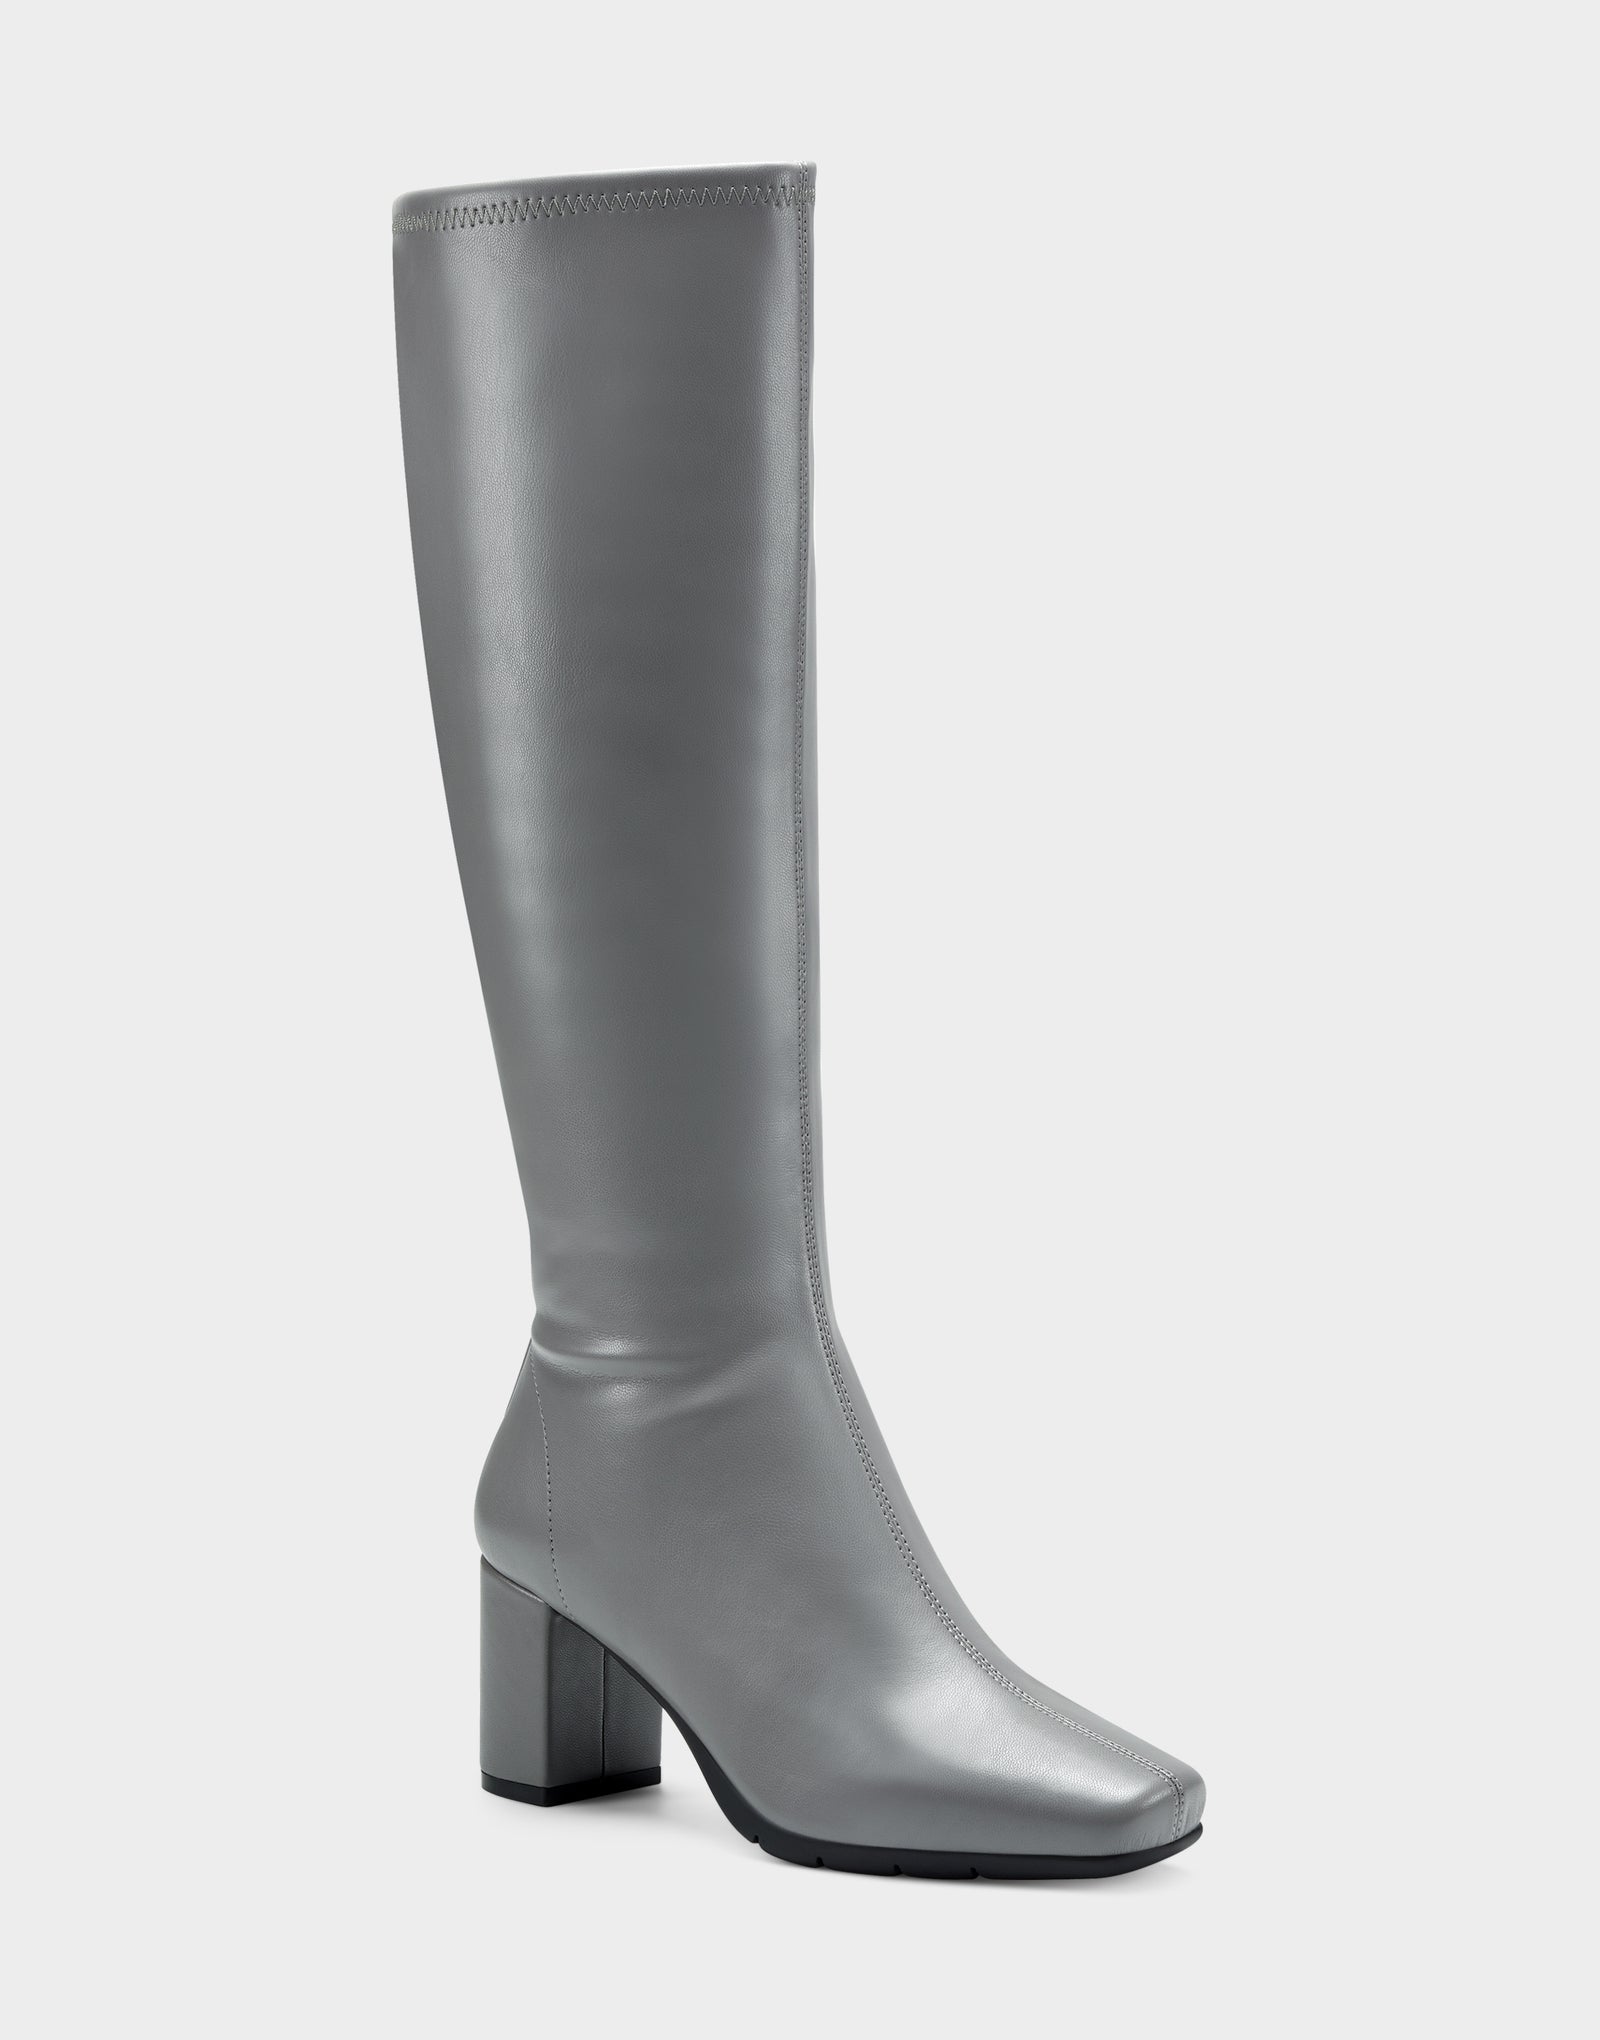 Women's Tall Boot in Grey